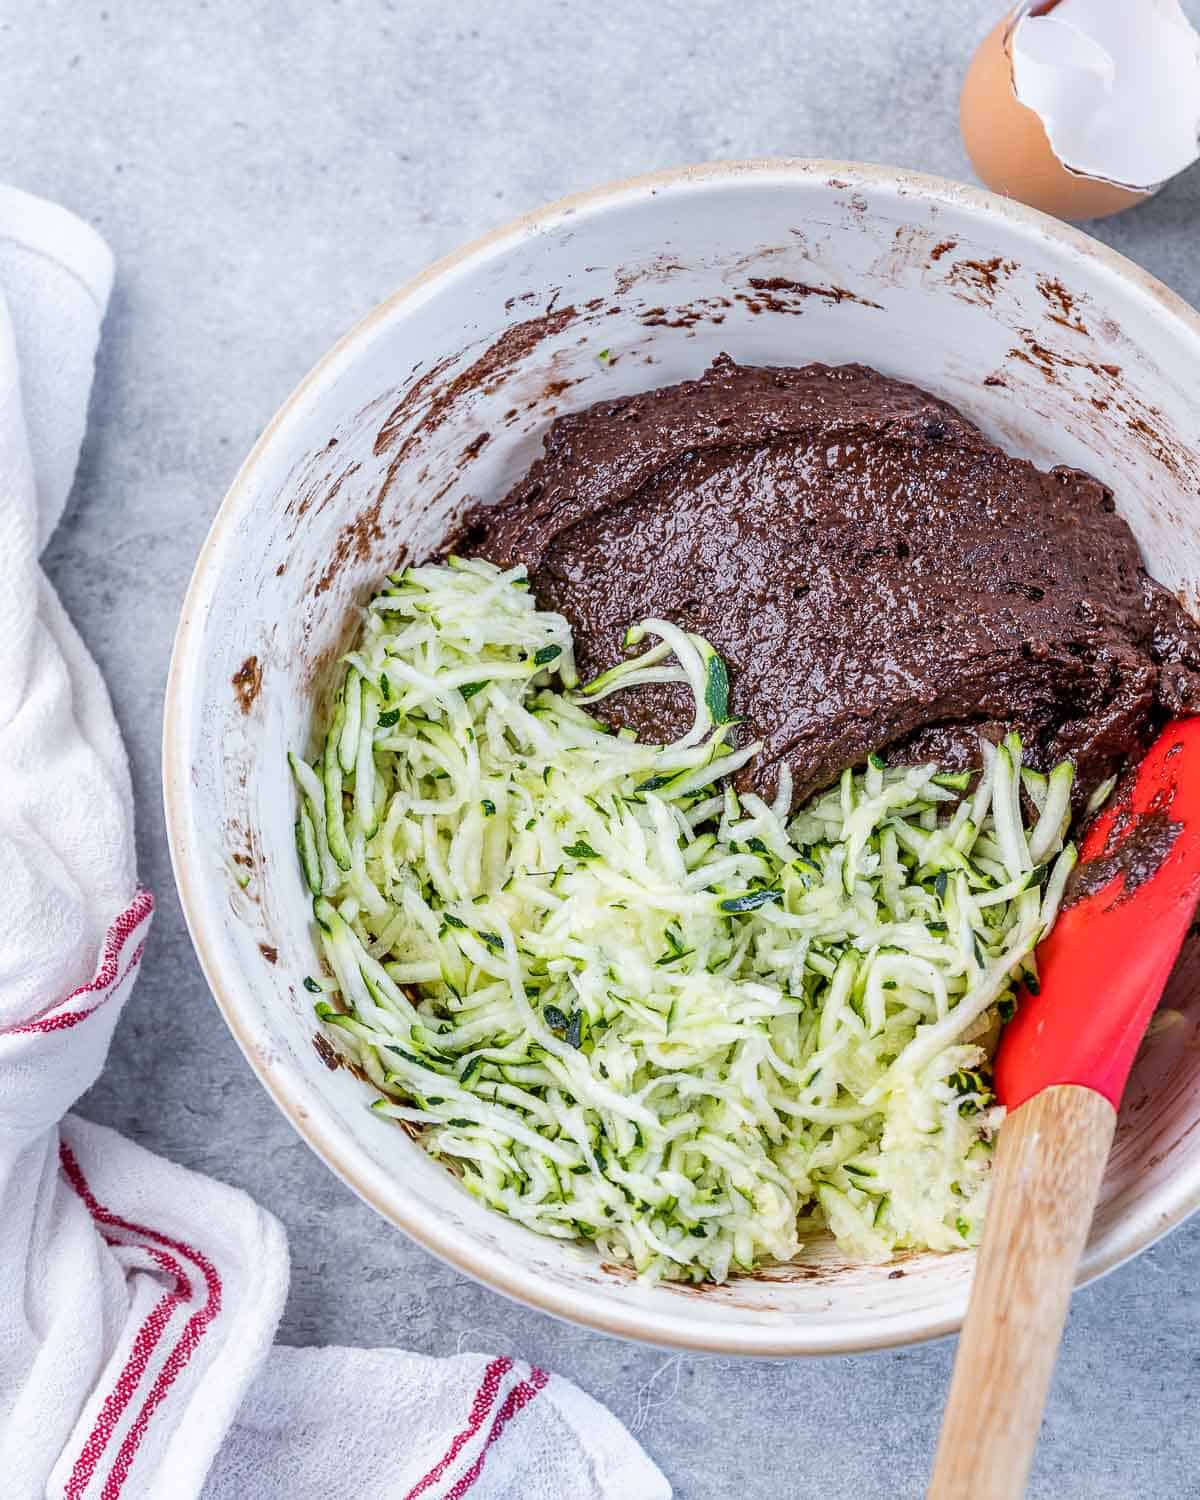 Adding shredded zucchini to chocolate brownie batter.